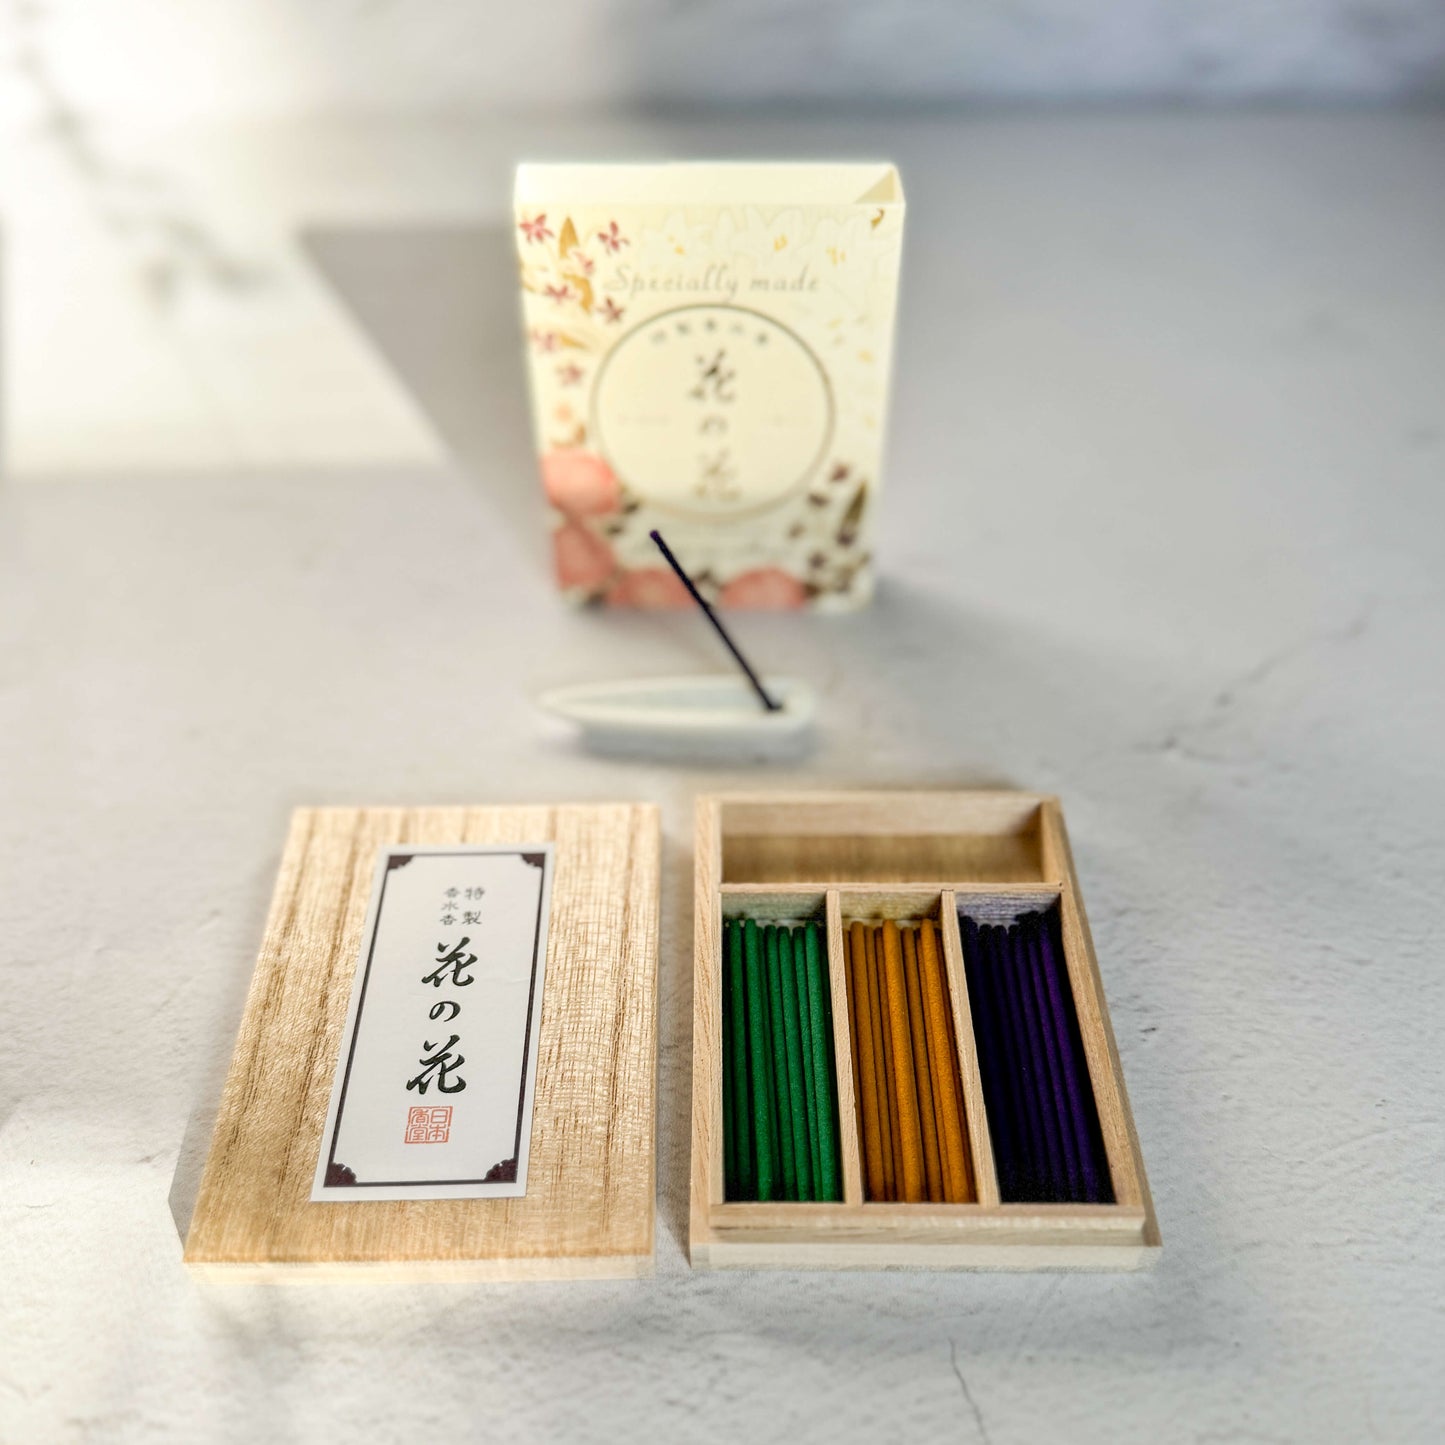 Japanese Incense "Hana-no-Hana" by Nippon Kodo